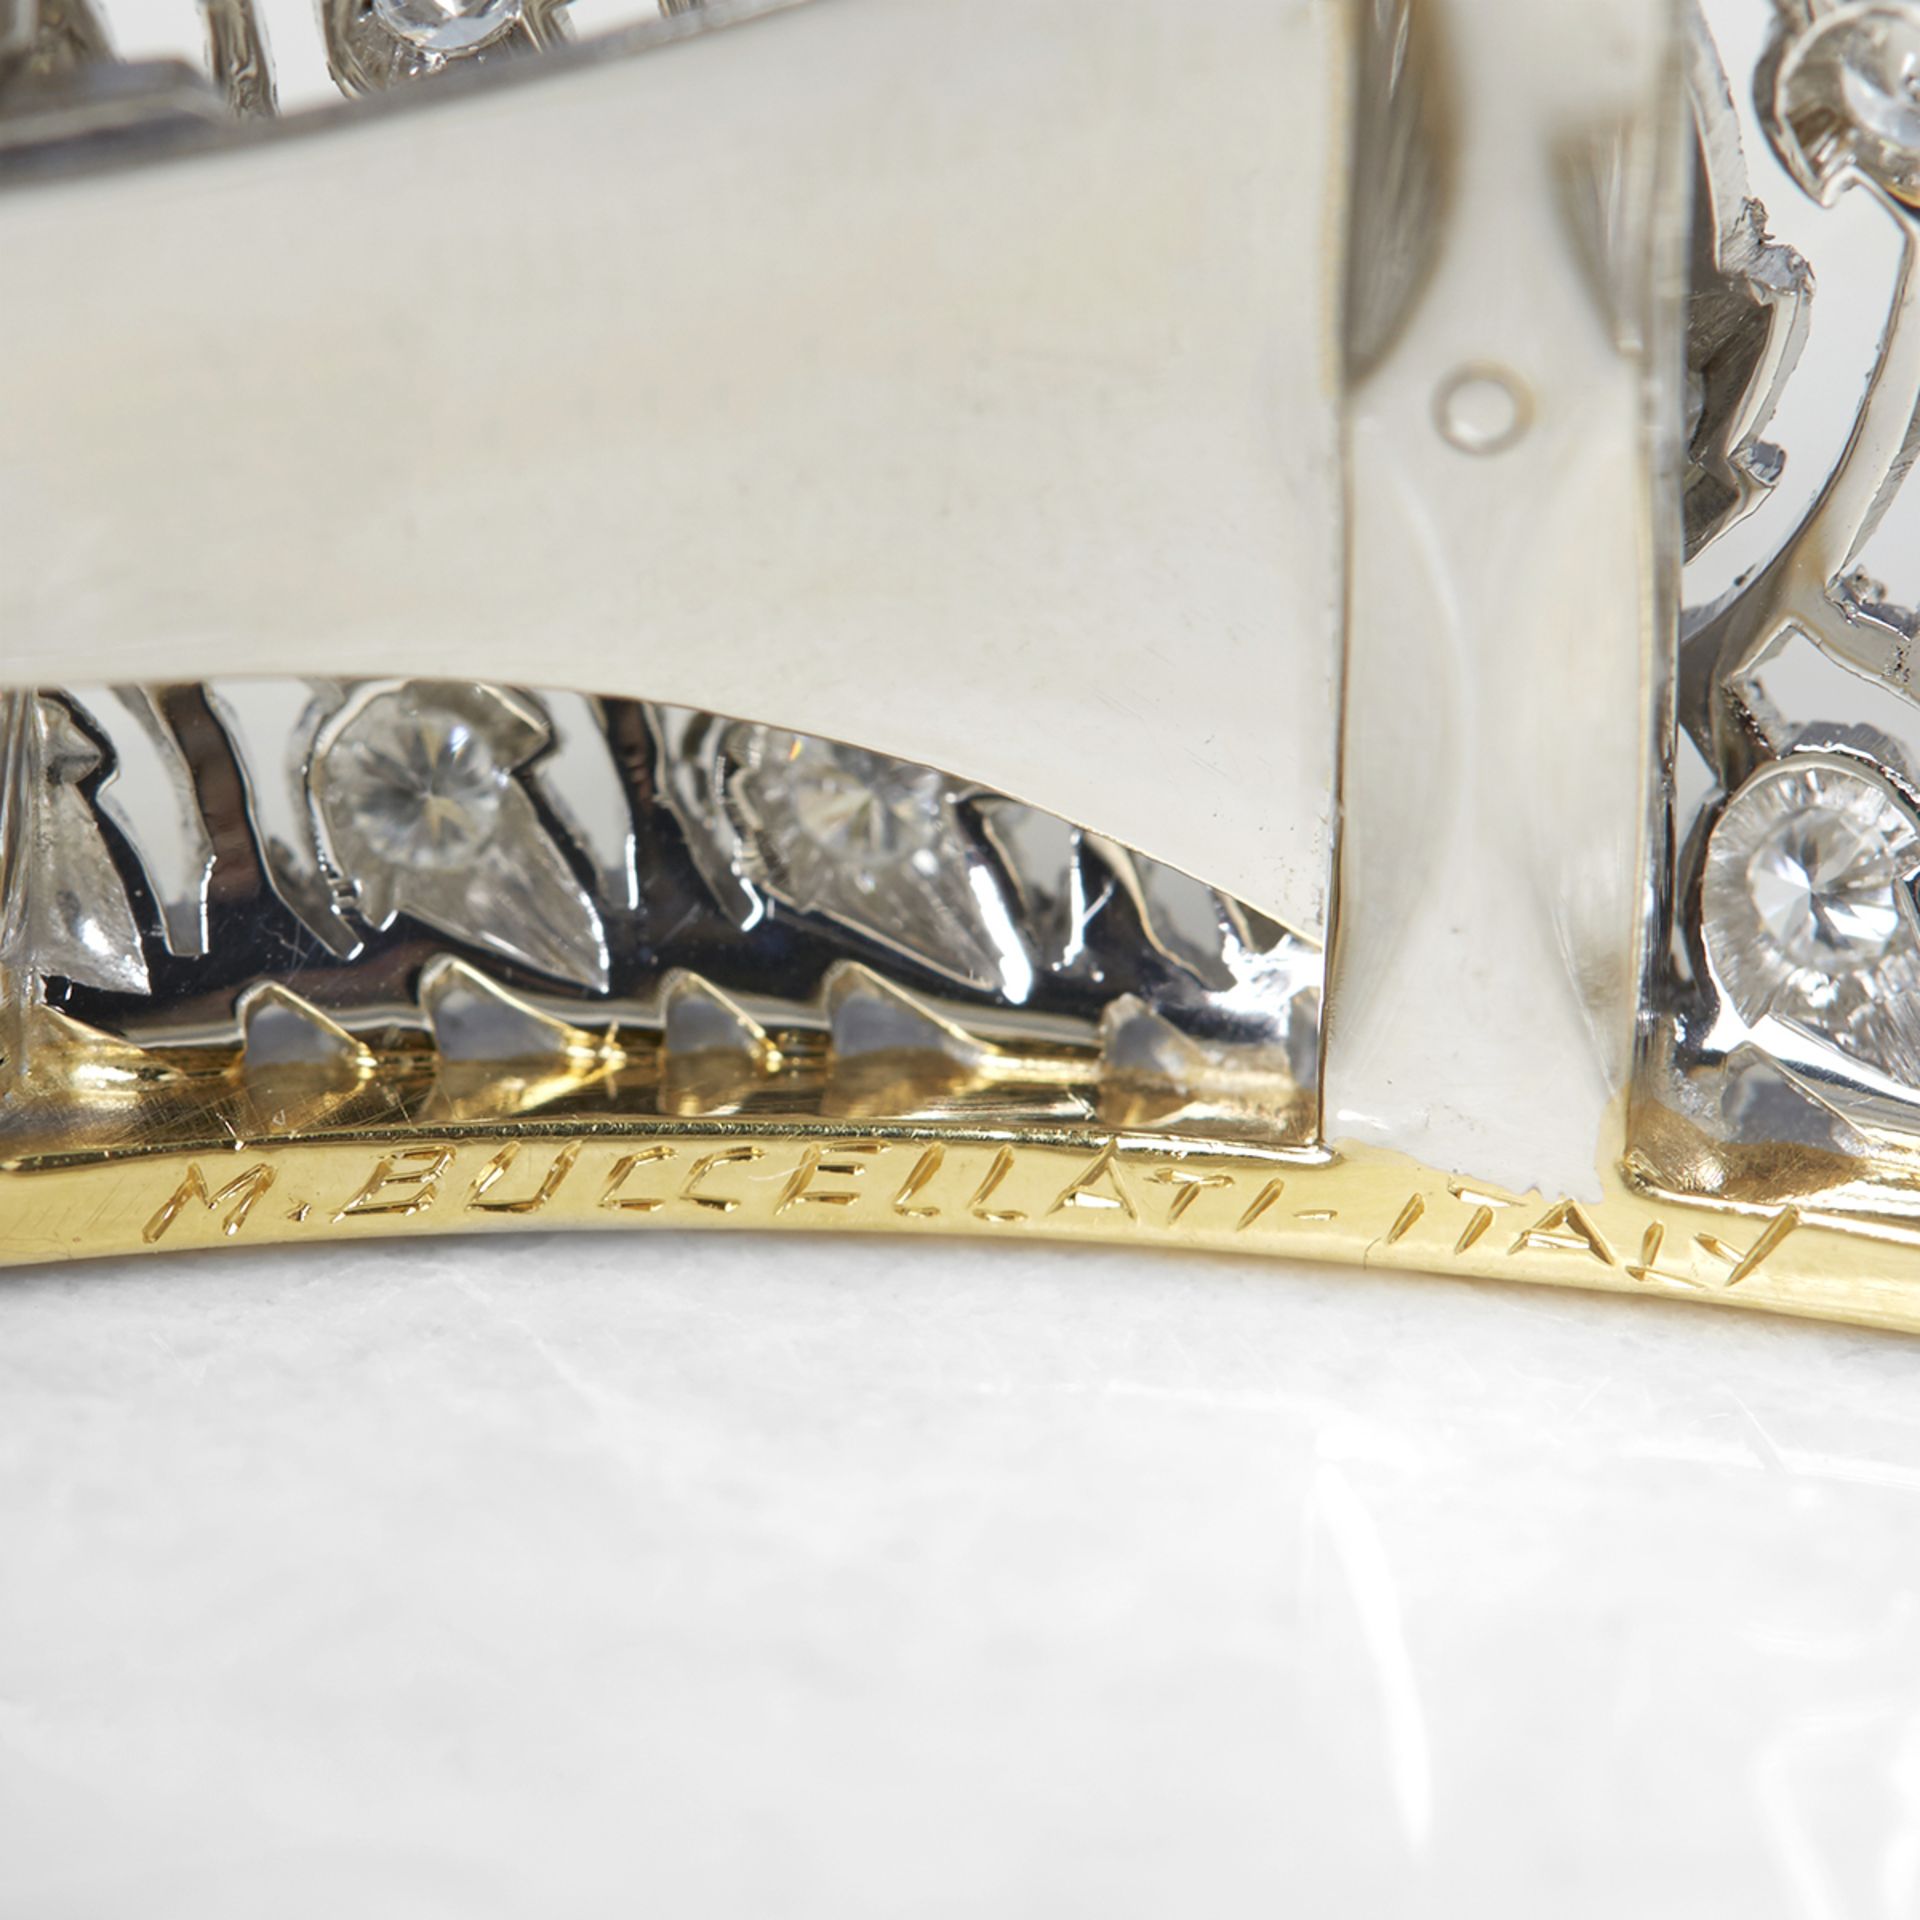 Buccellati 18k White & Yellow Gold 5.00ct Diamond Cuff Bracelet with Presentation Box - Image 7 of 8